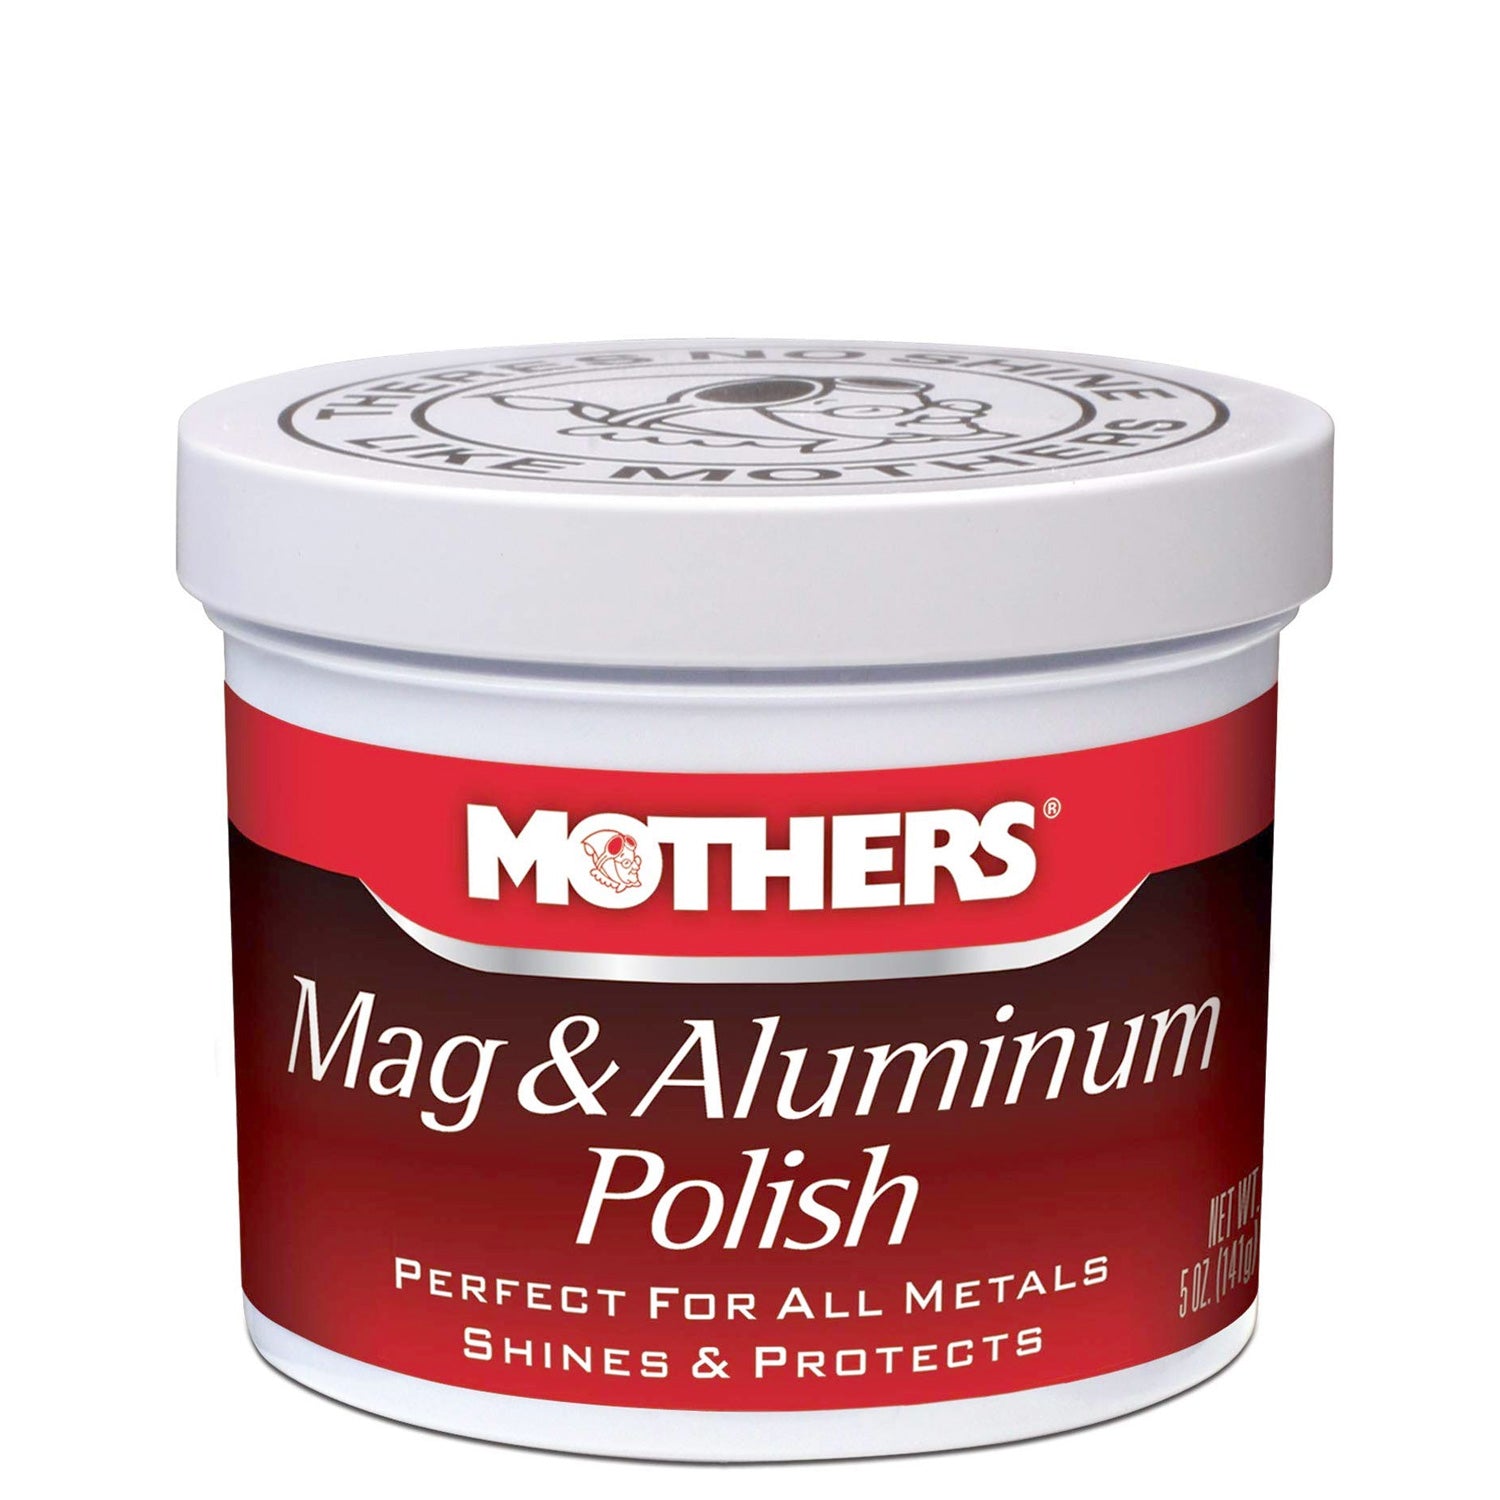 Mothers 05100 Mag & Aluminum Polish, 5 oz. by GOSO Direct